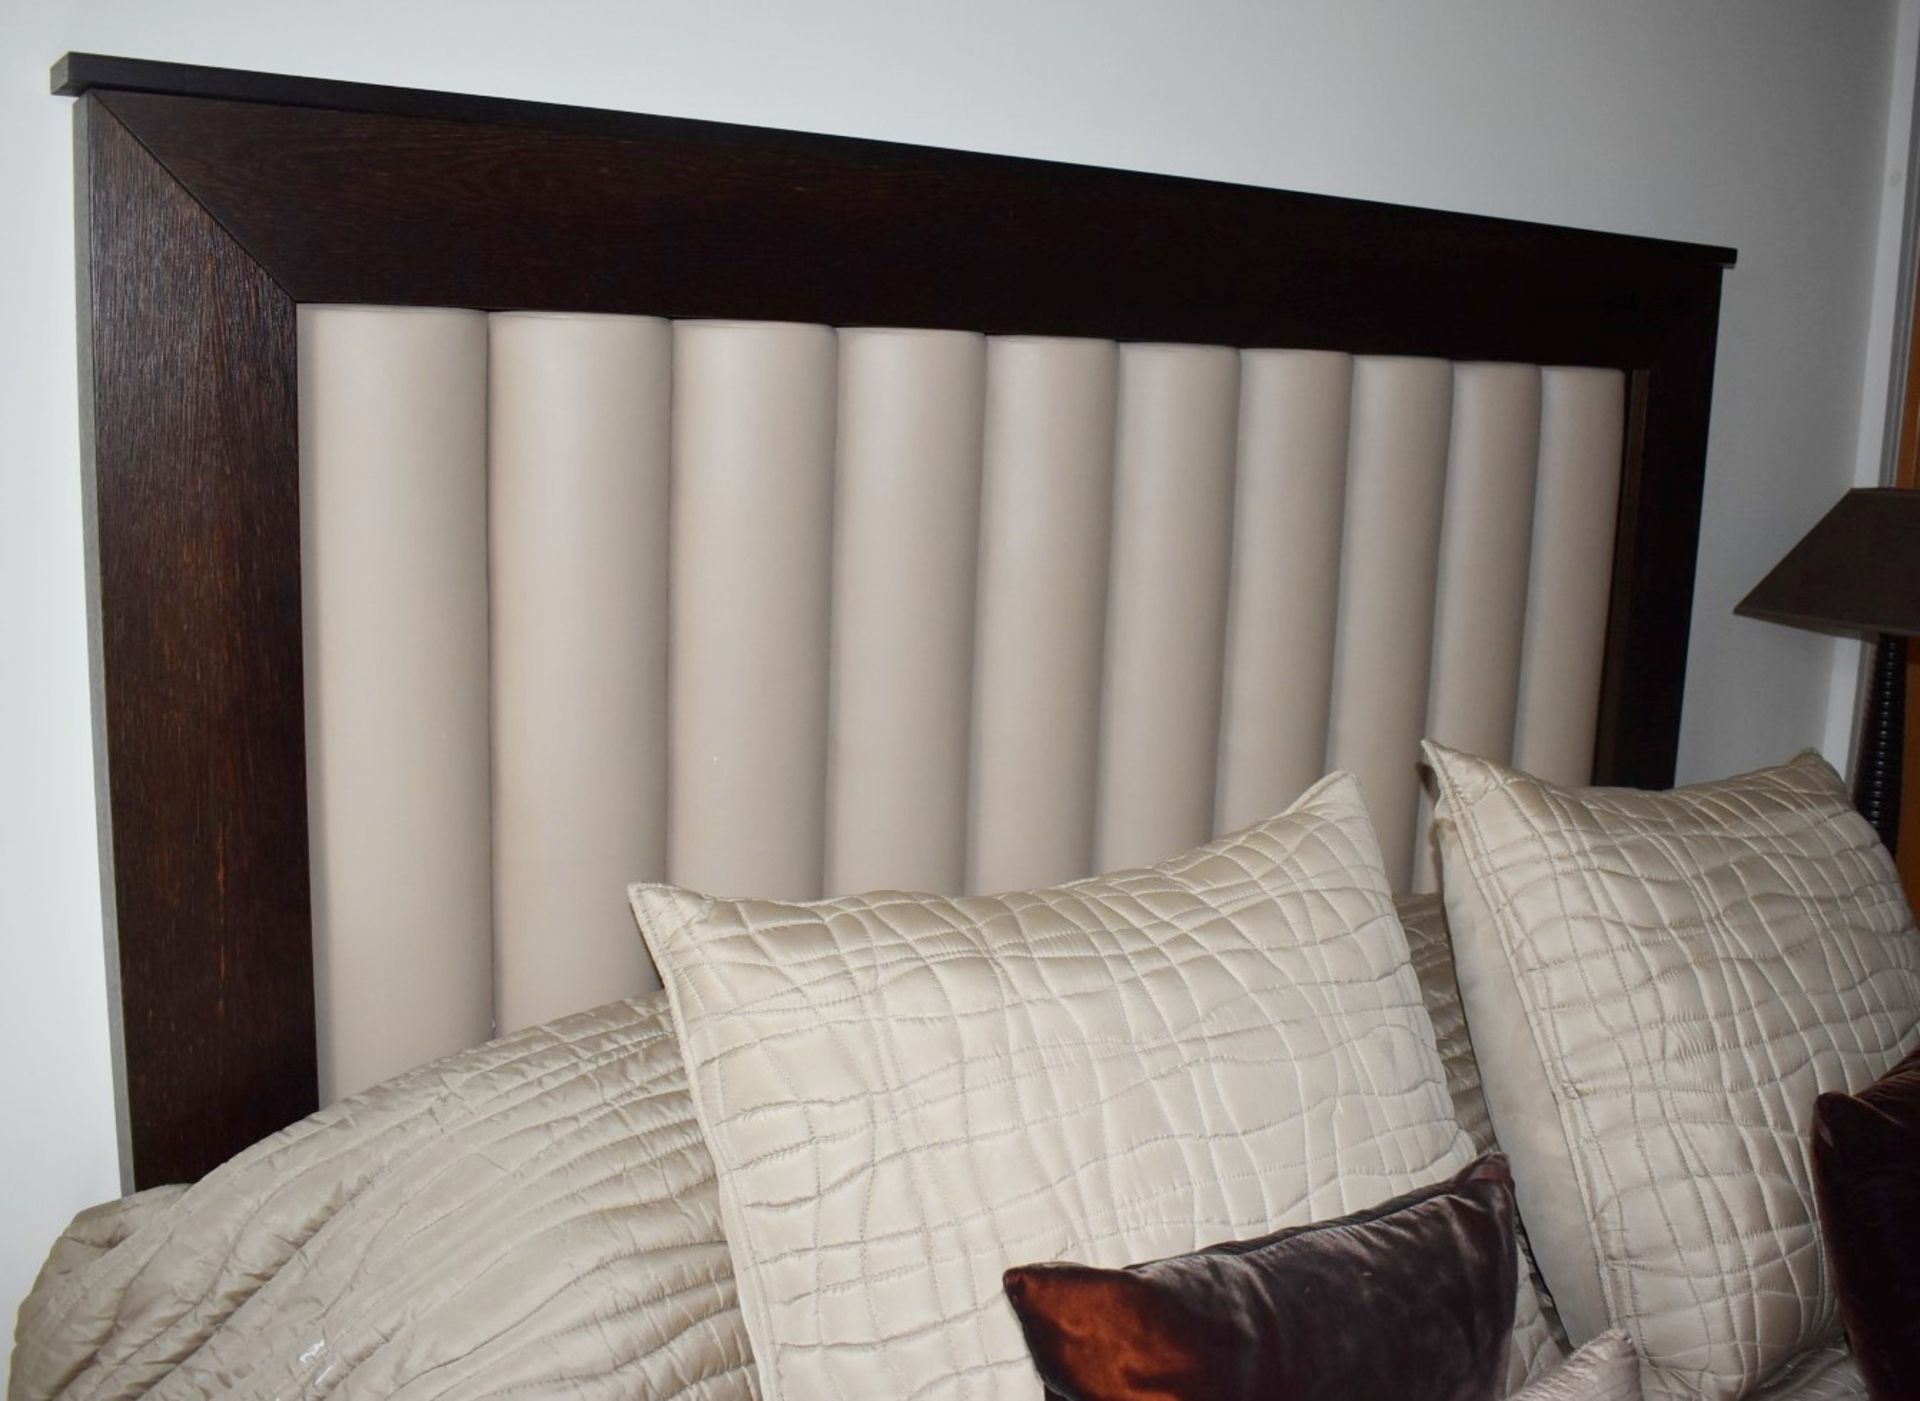 6-Piece Dark Wood Bedroom Furniture Set - Includes 2.8 Metre Long Dressing Table, Headboard & More - Image 8 of 10